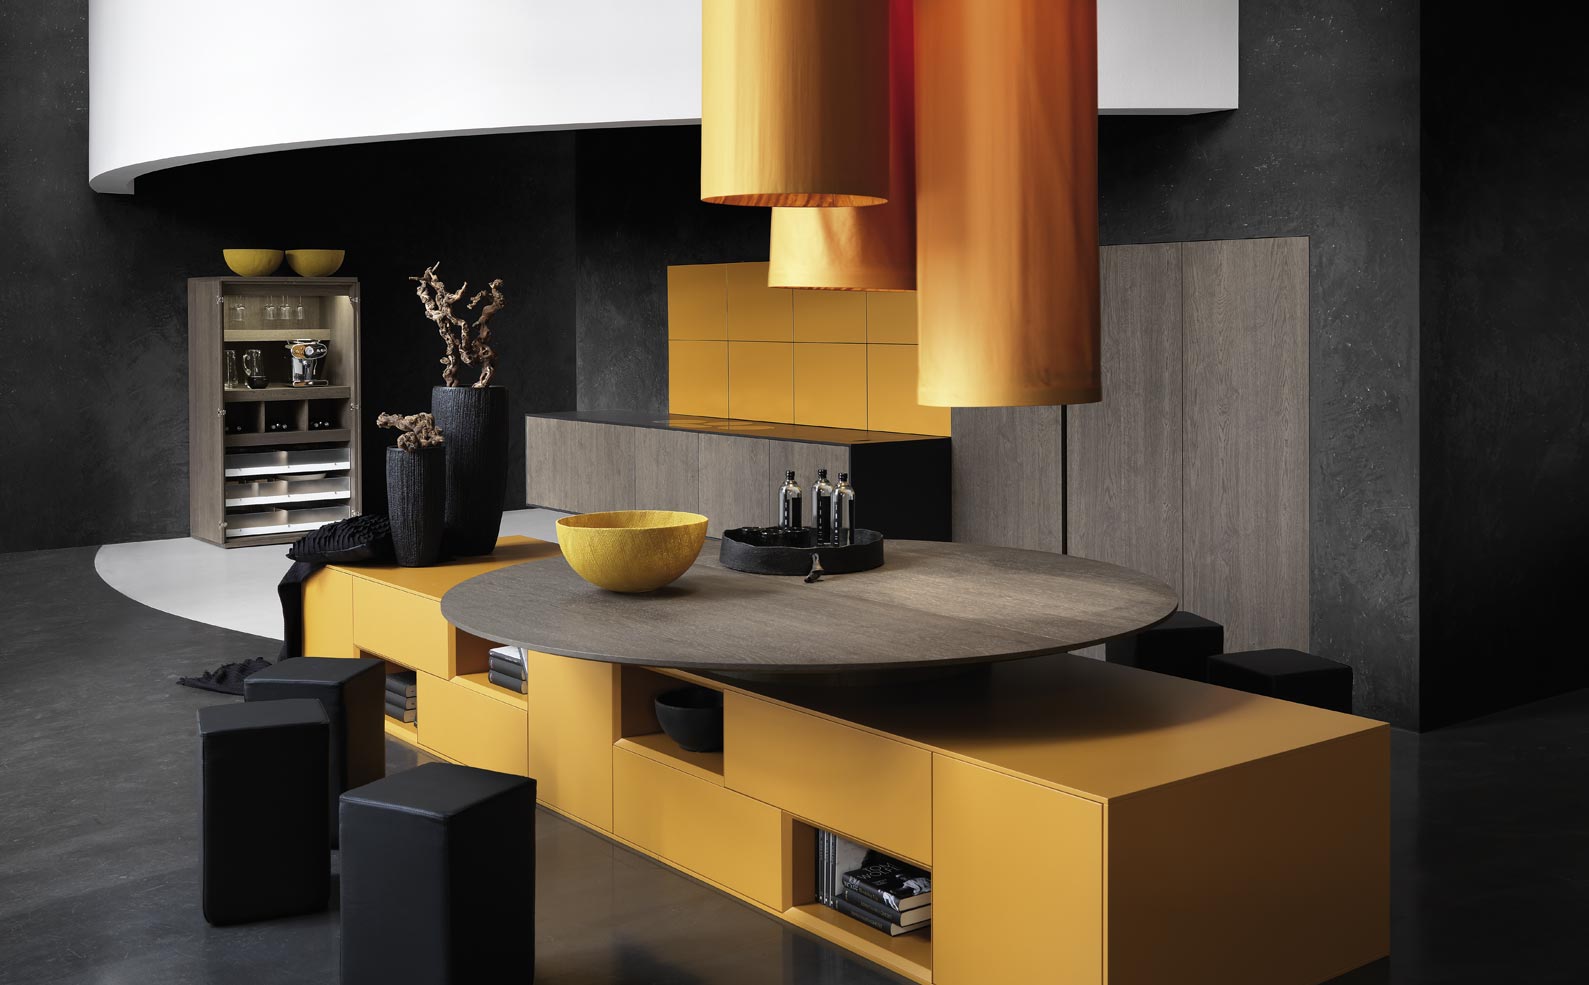 Matching modern kitchen designs from Rational | Interior ...